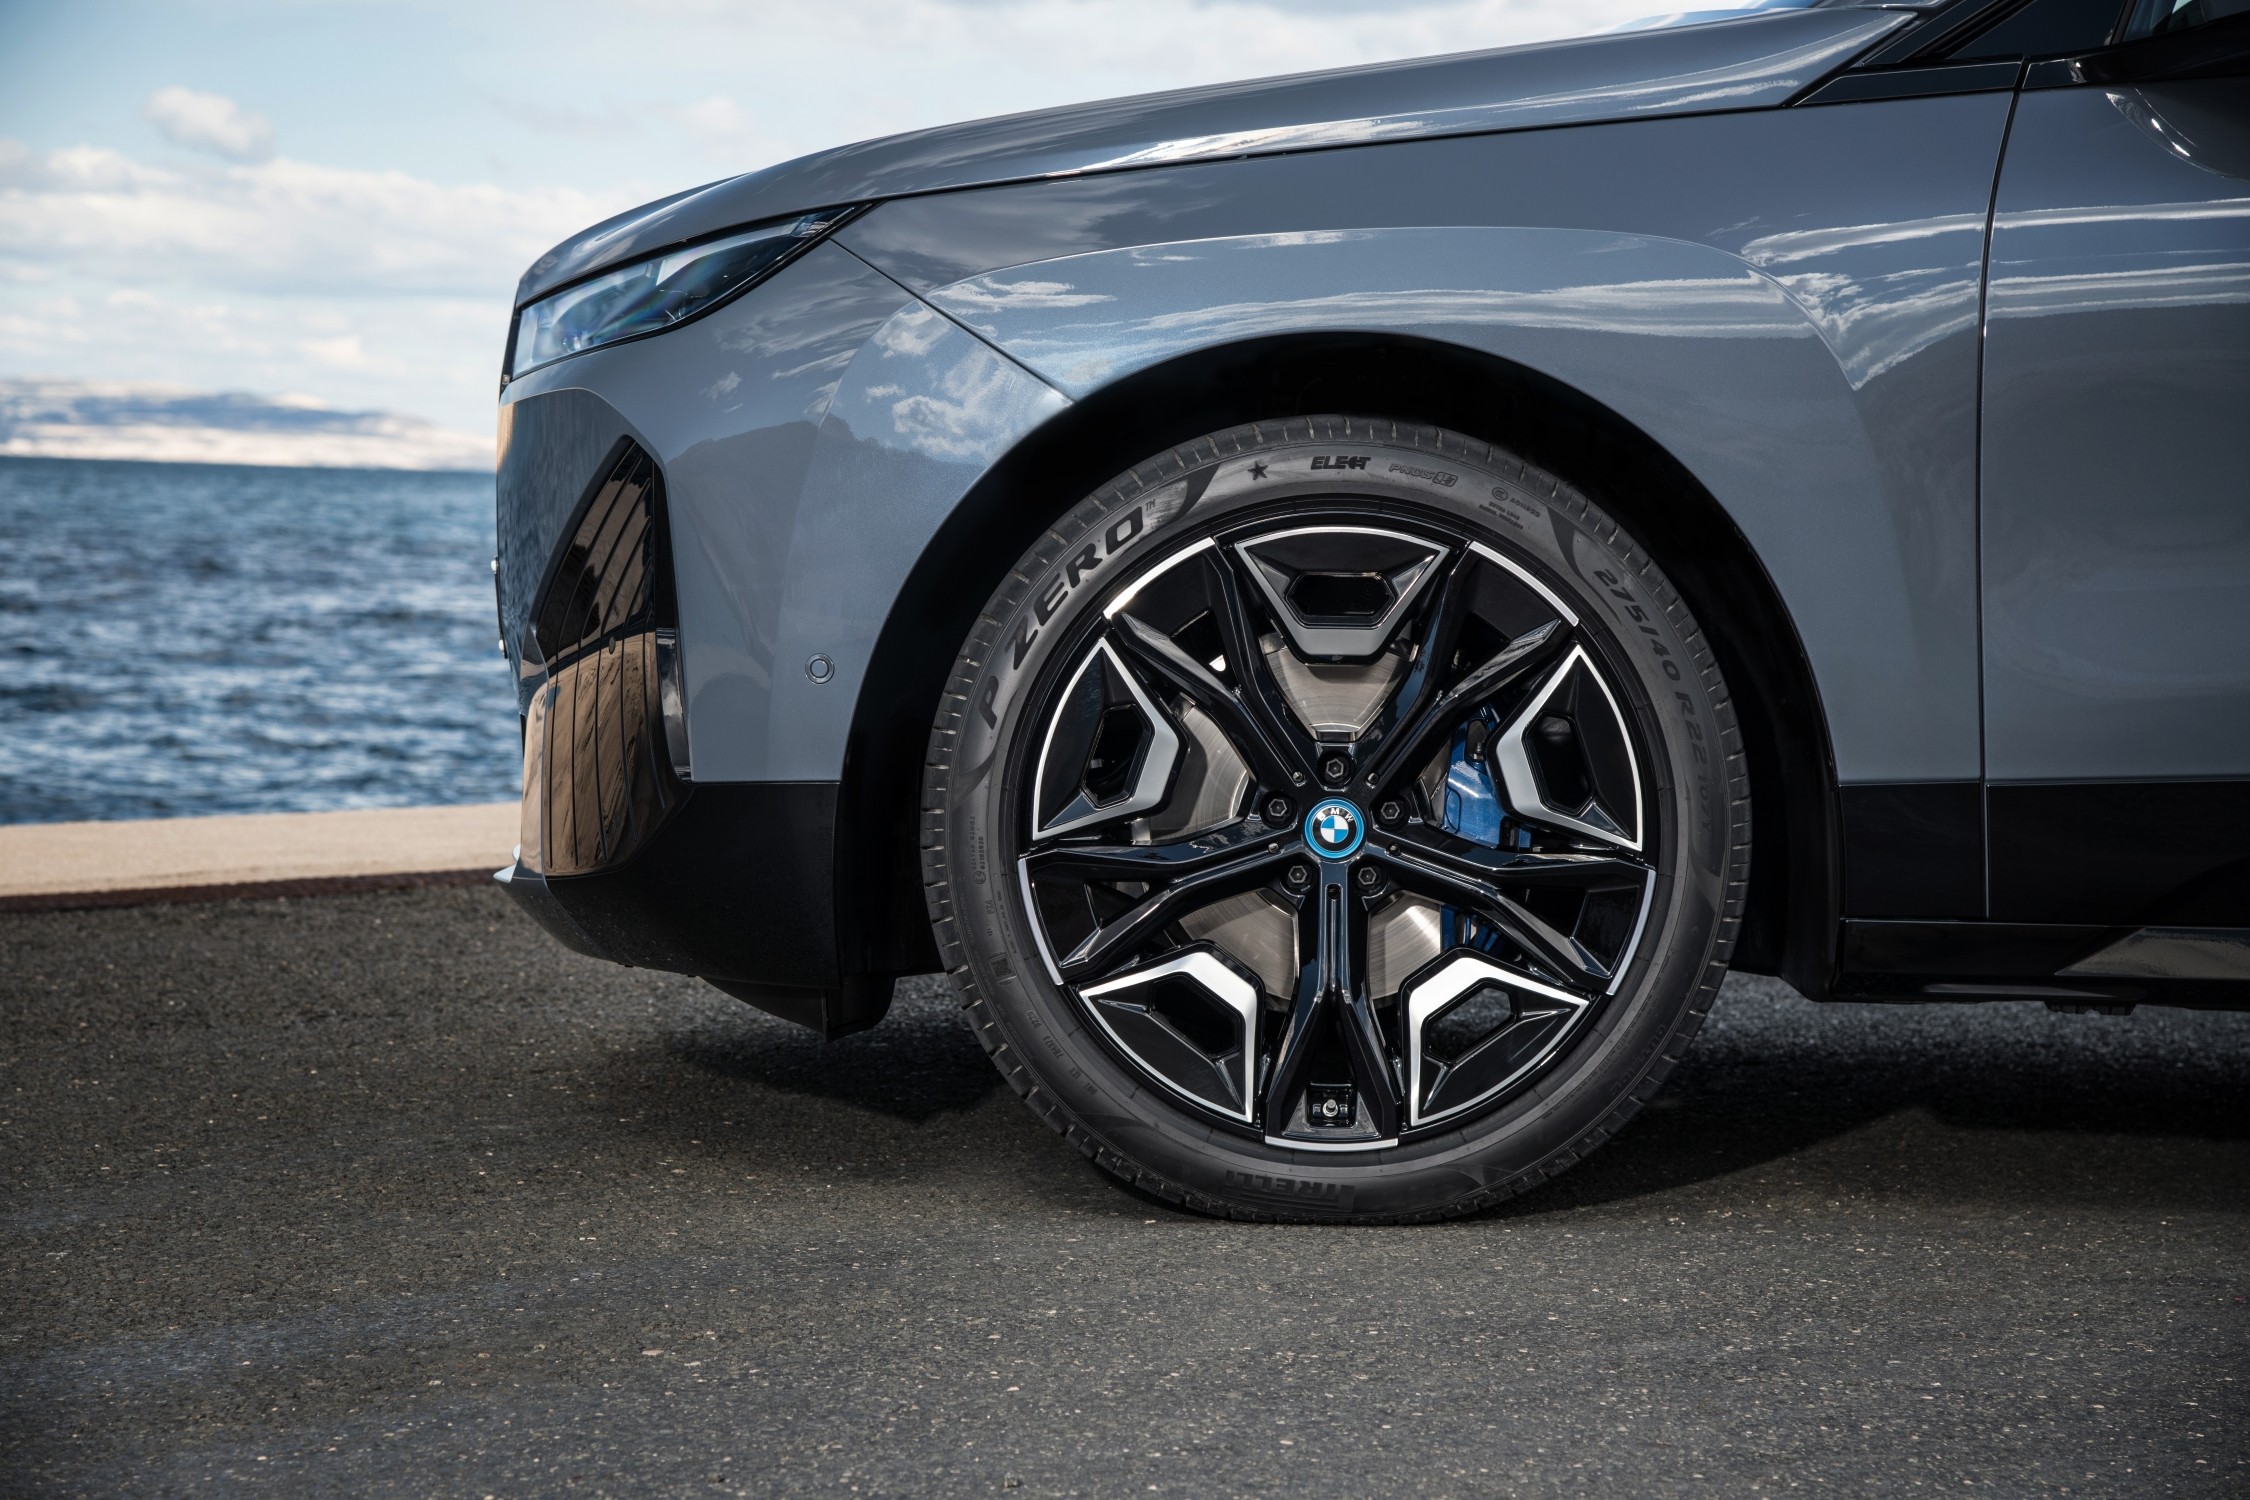 New Pirelli P Zero Elect Tyres For The All-Electric BMW Ix Bavarian Flagship